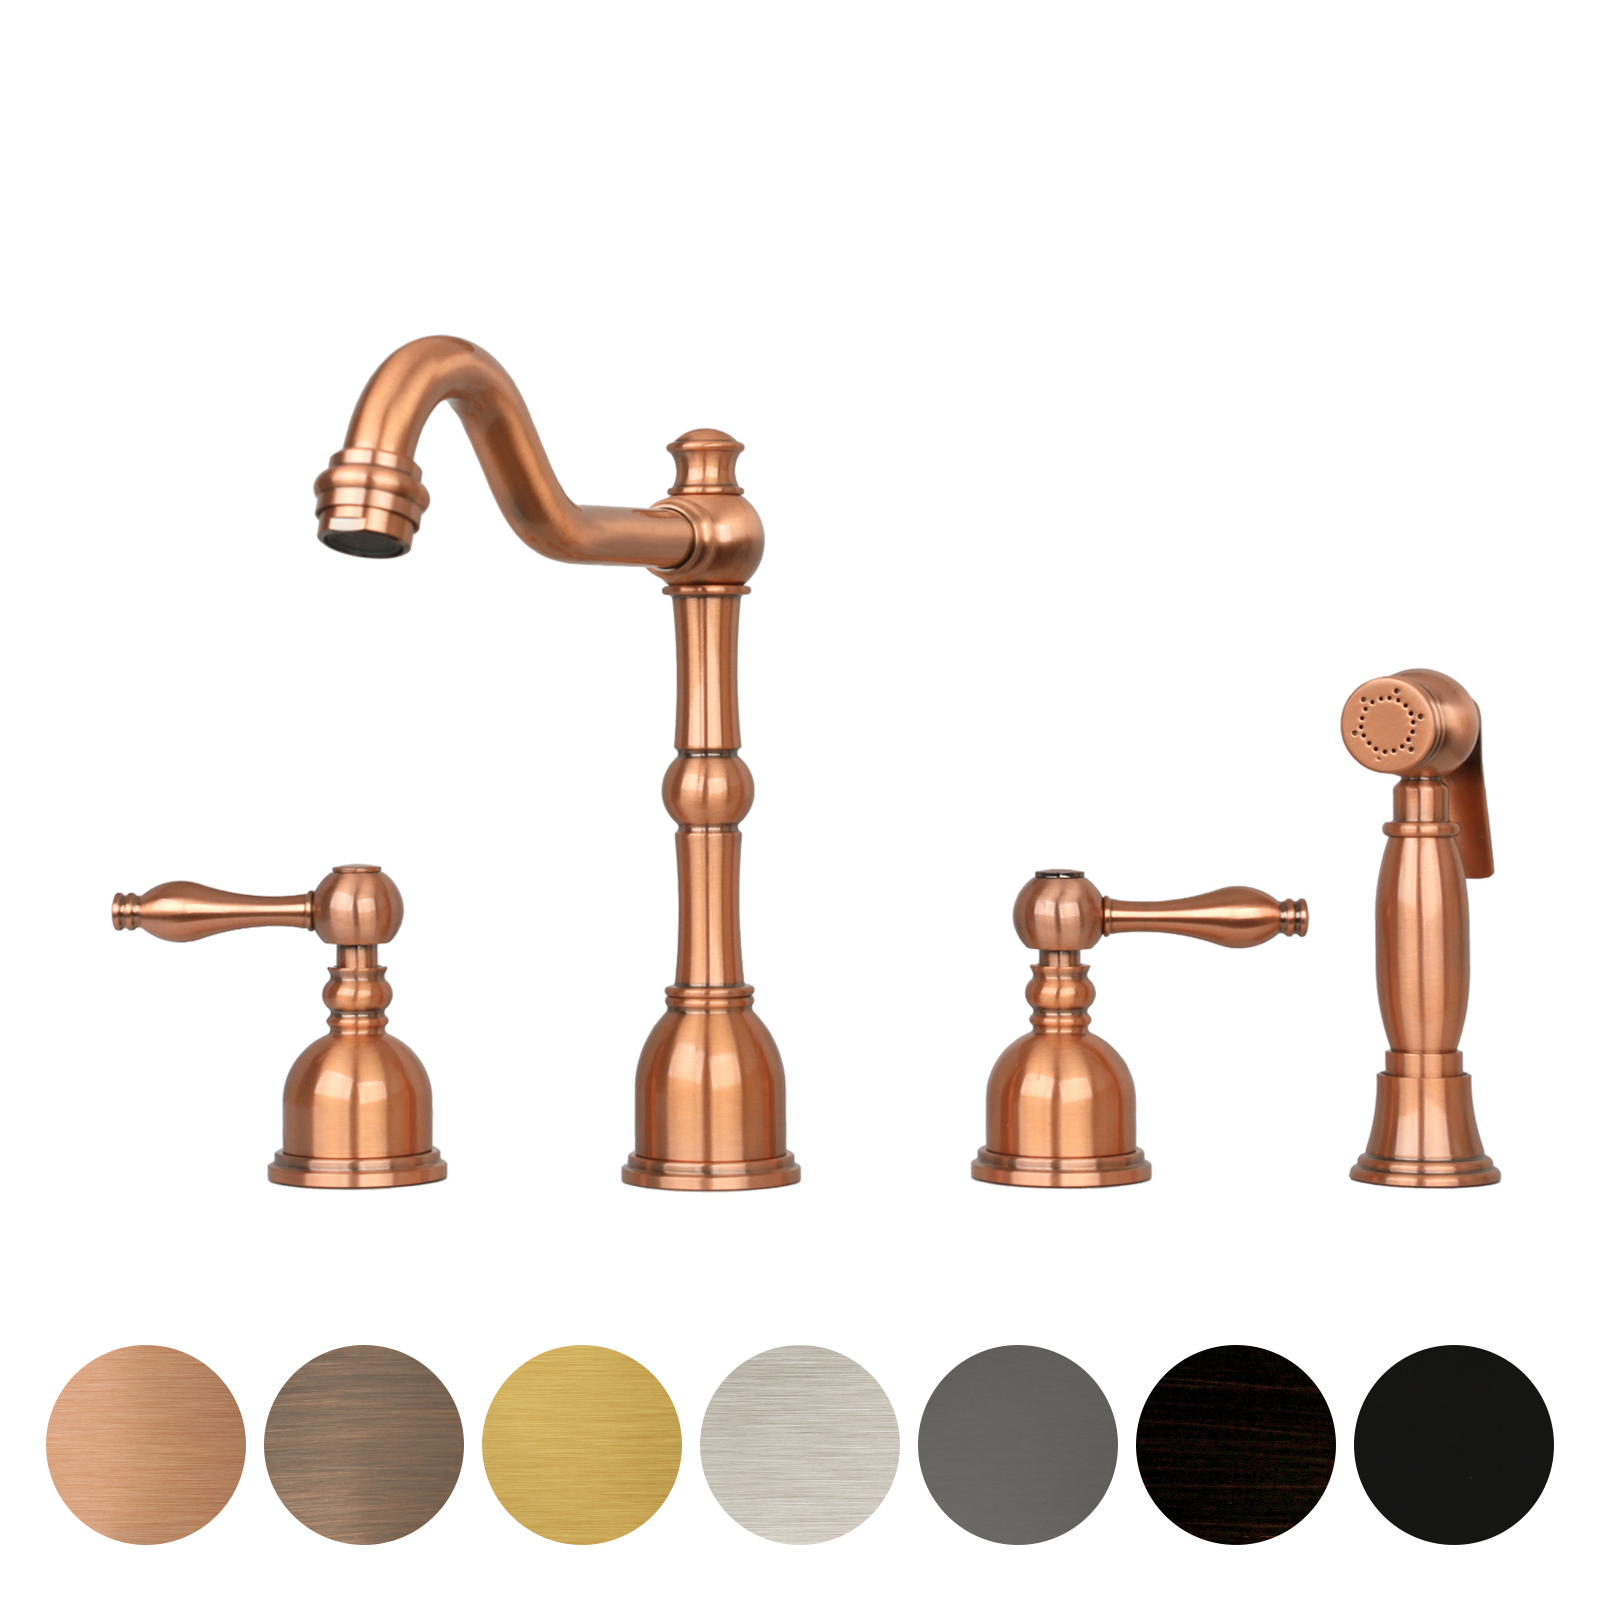 Copper Widespread Kitchen Faucet